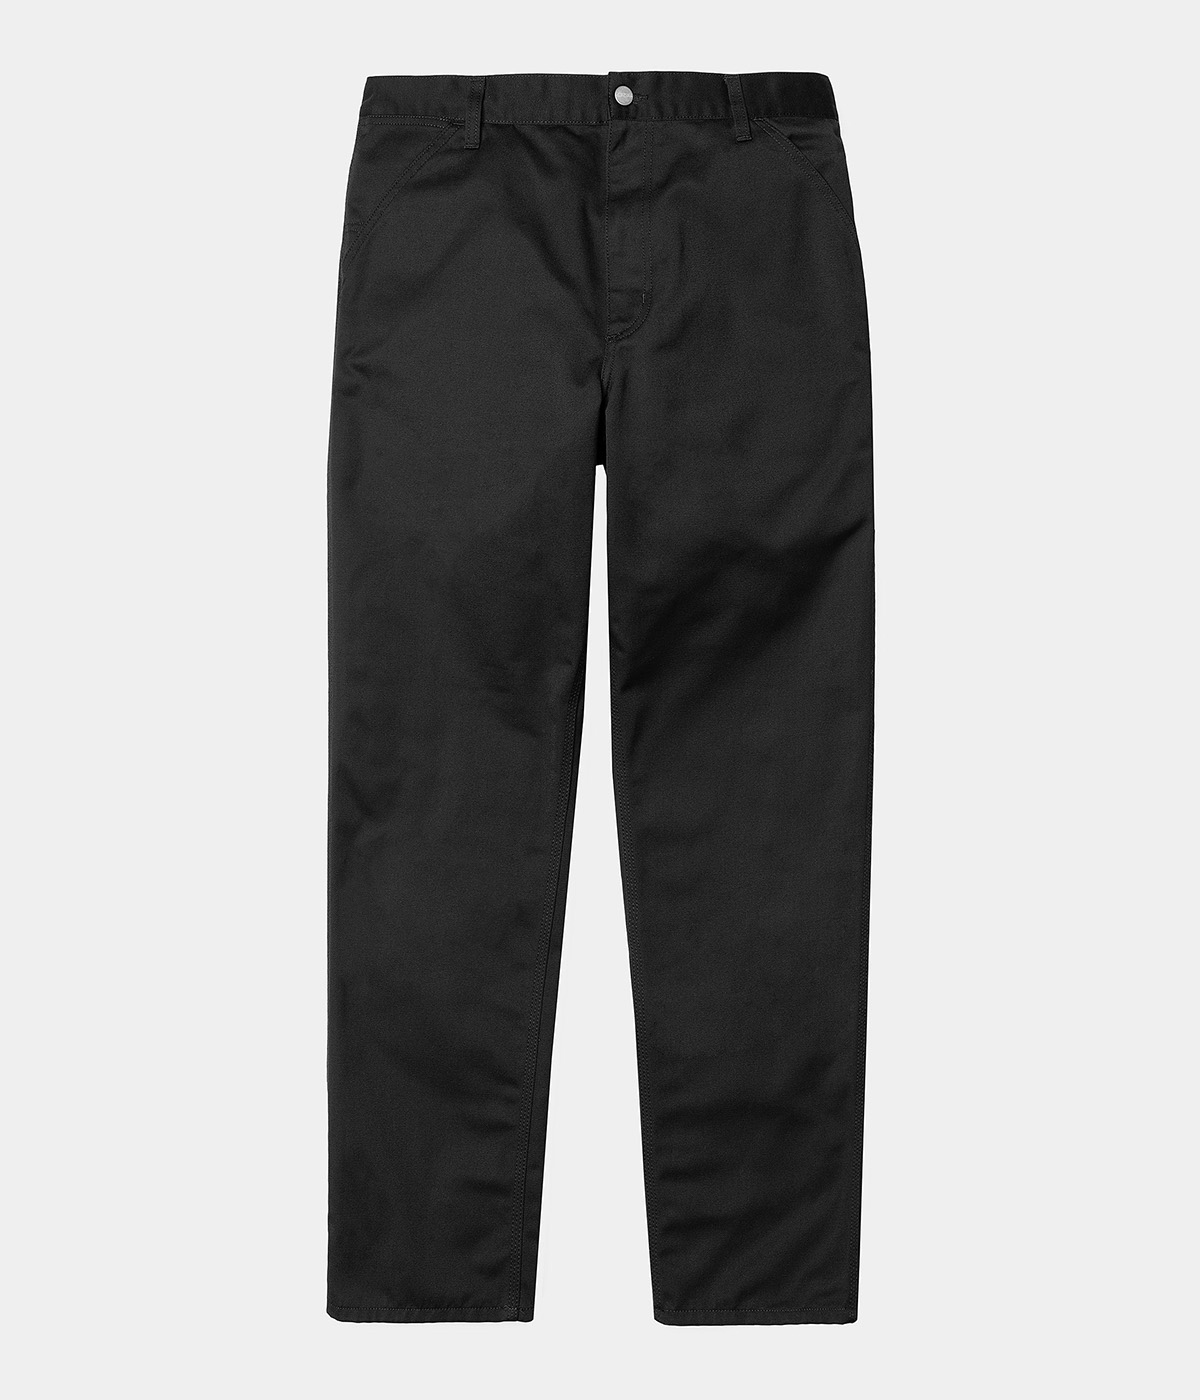 Carhartt Pant Simple Black/Rinsed 3